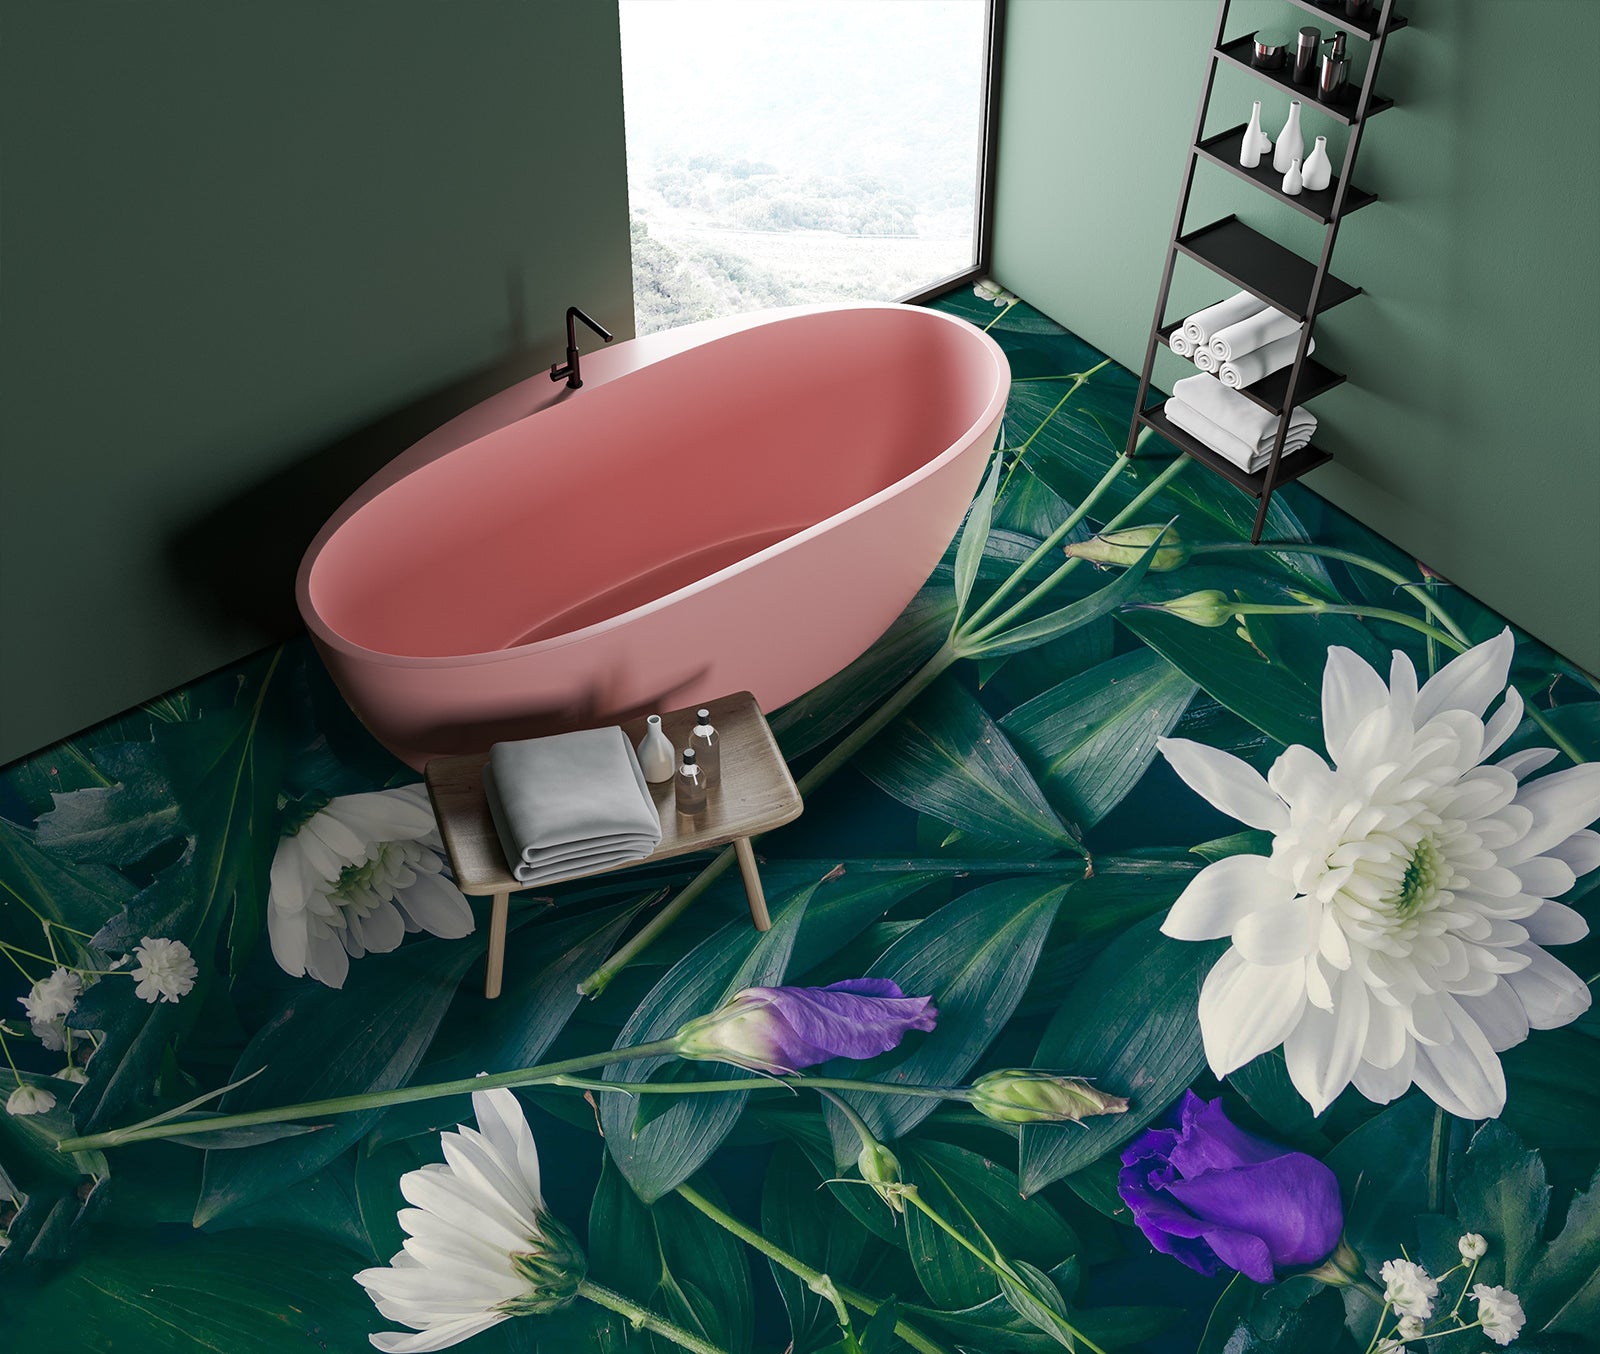 3D Memory Of White Flowers 563 Floor Mural  Wallpaper Murals Rug & Mat Print Epoxy waterproof bath floor